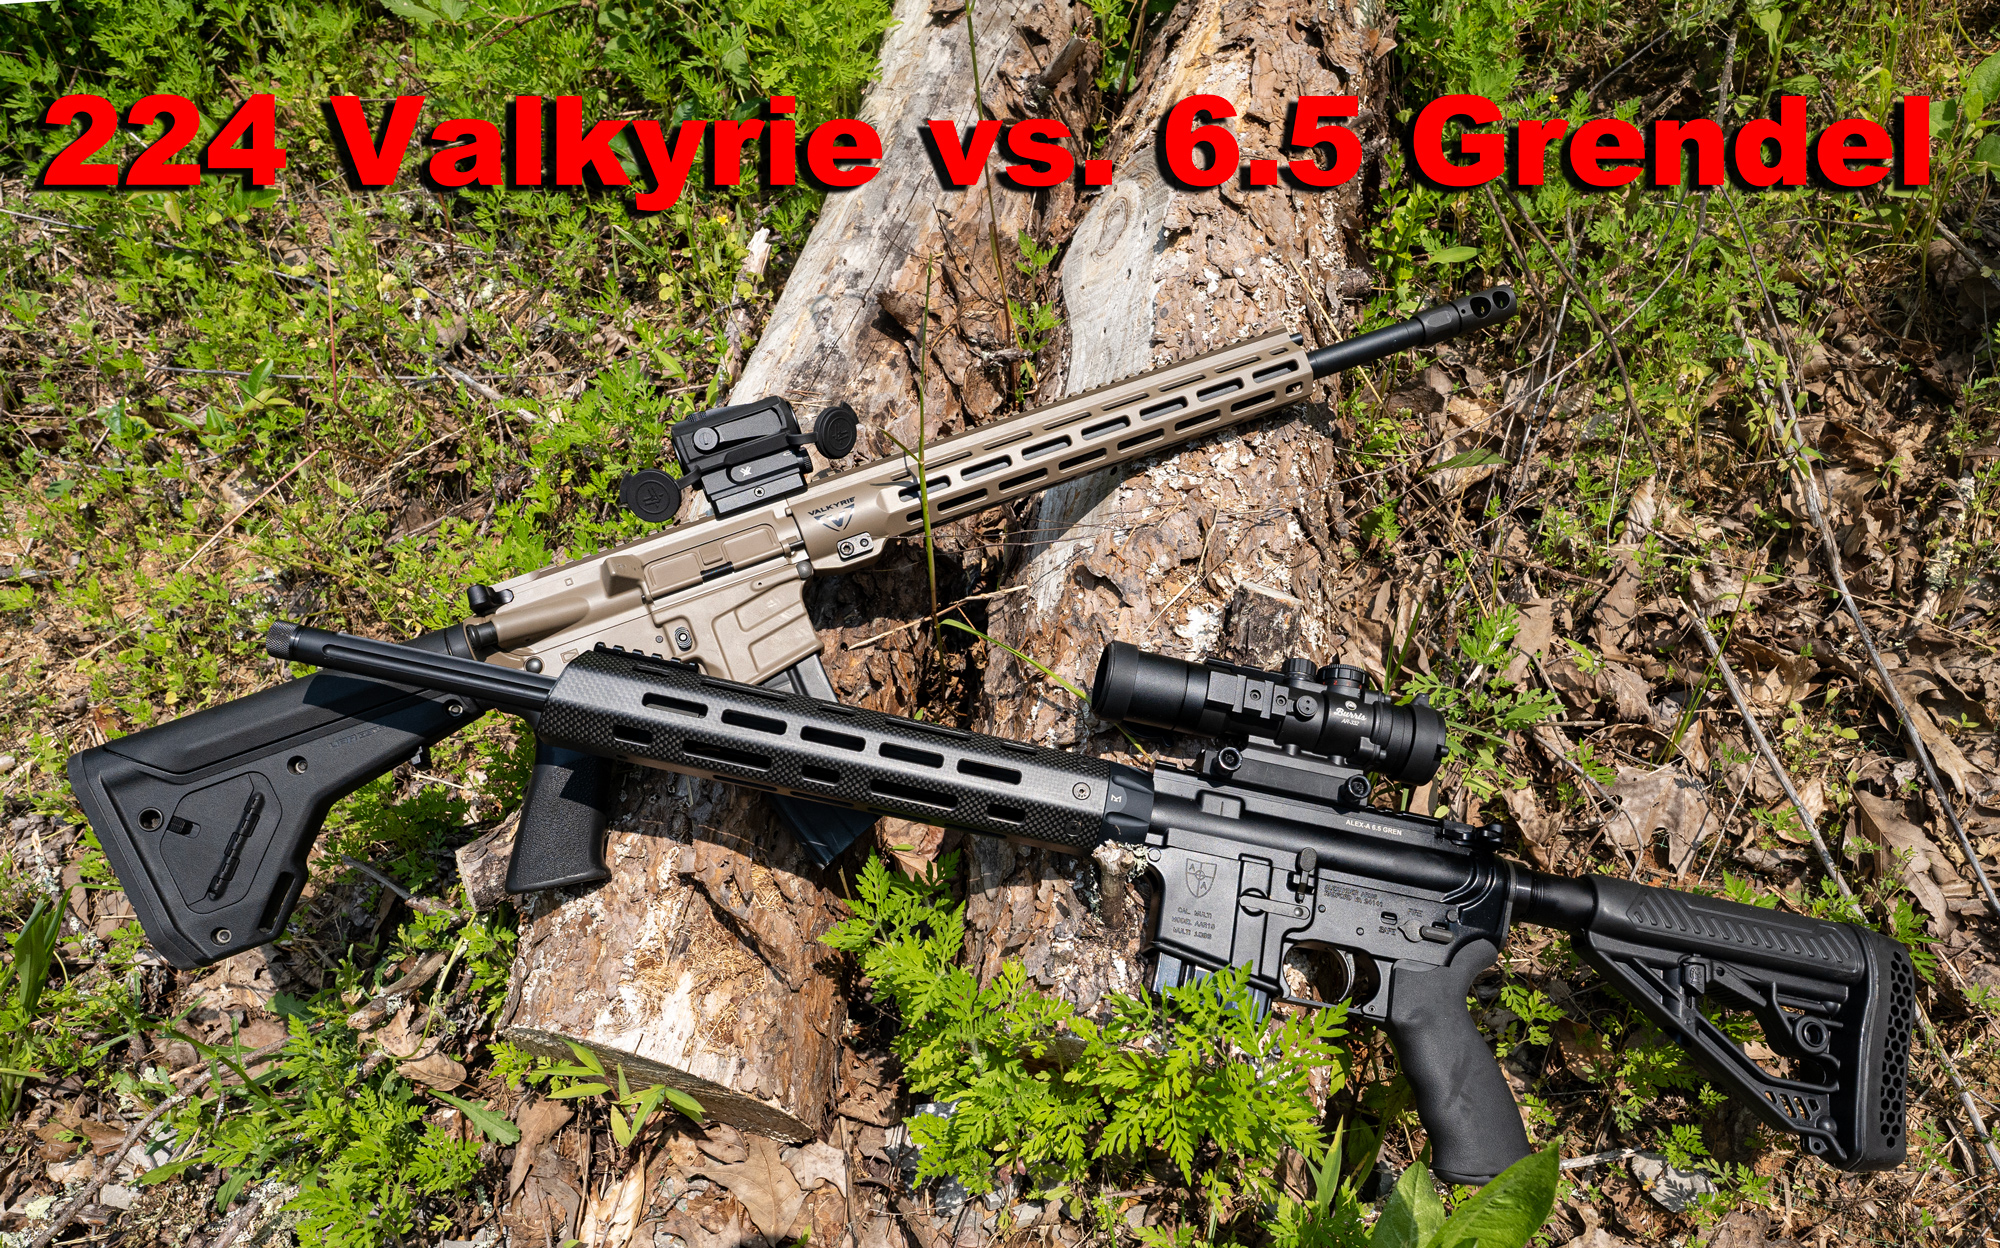 224 Valkyrie rifle vs 6.5 Grendel rifle